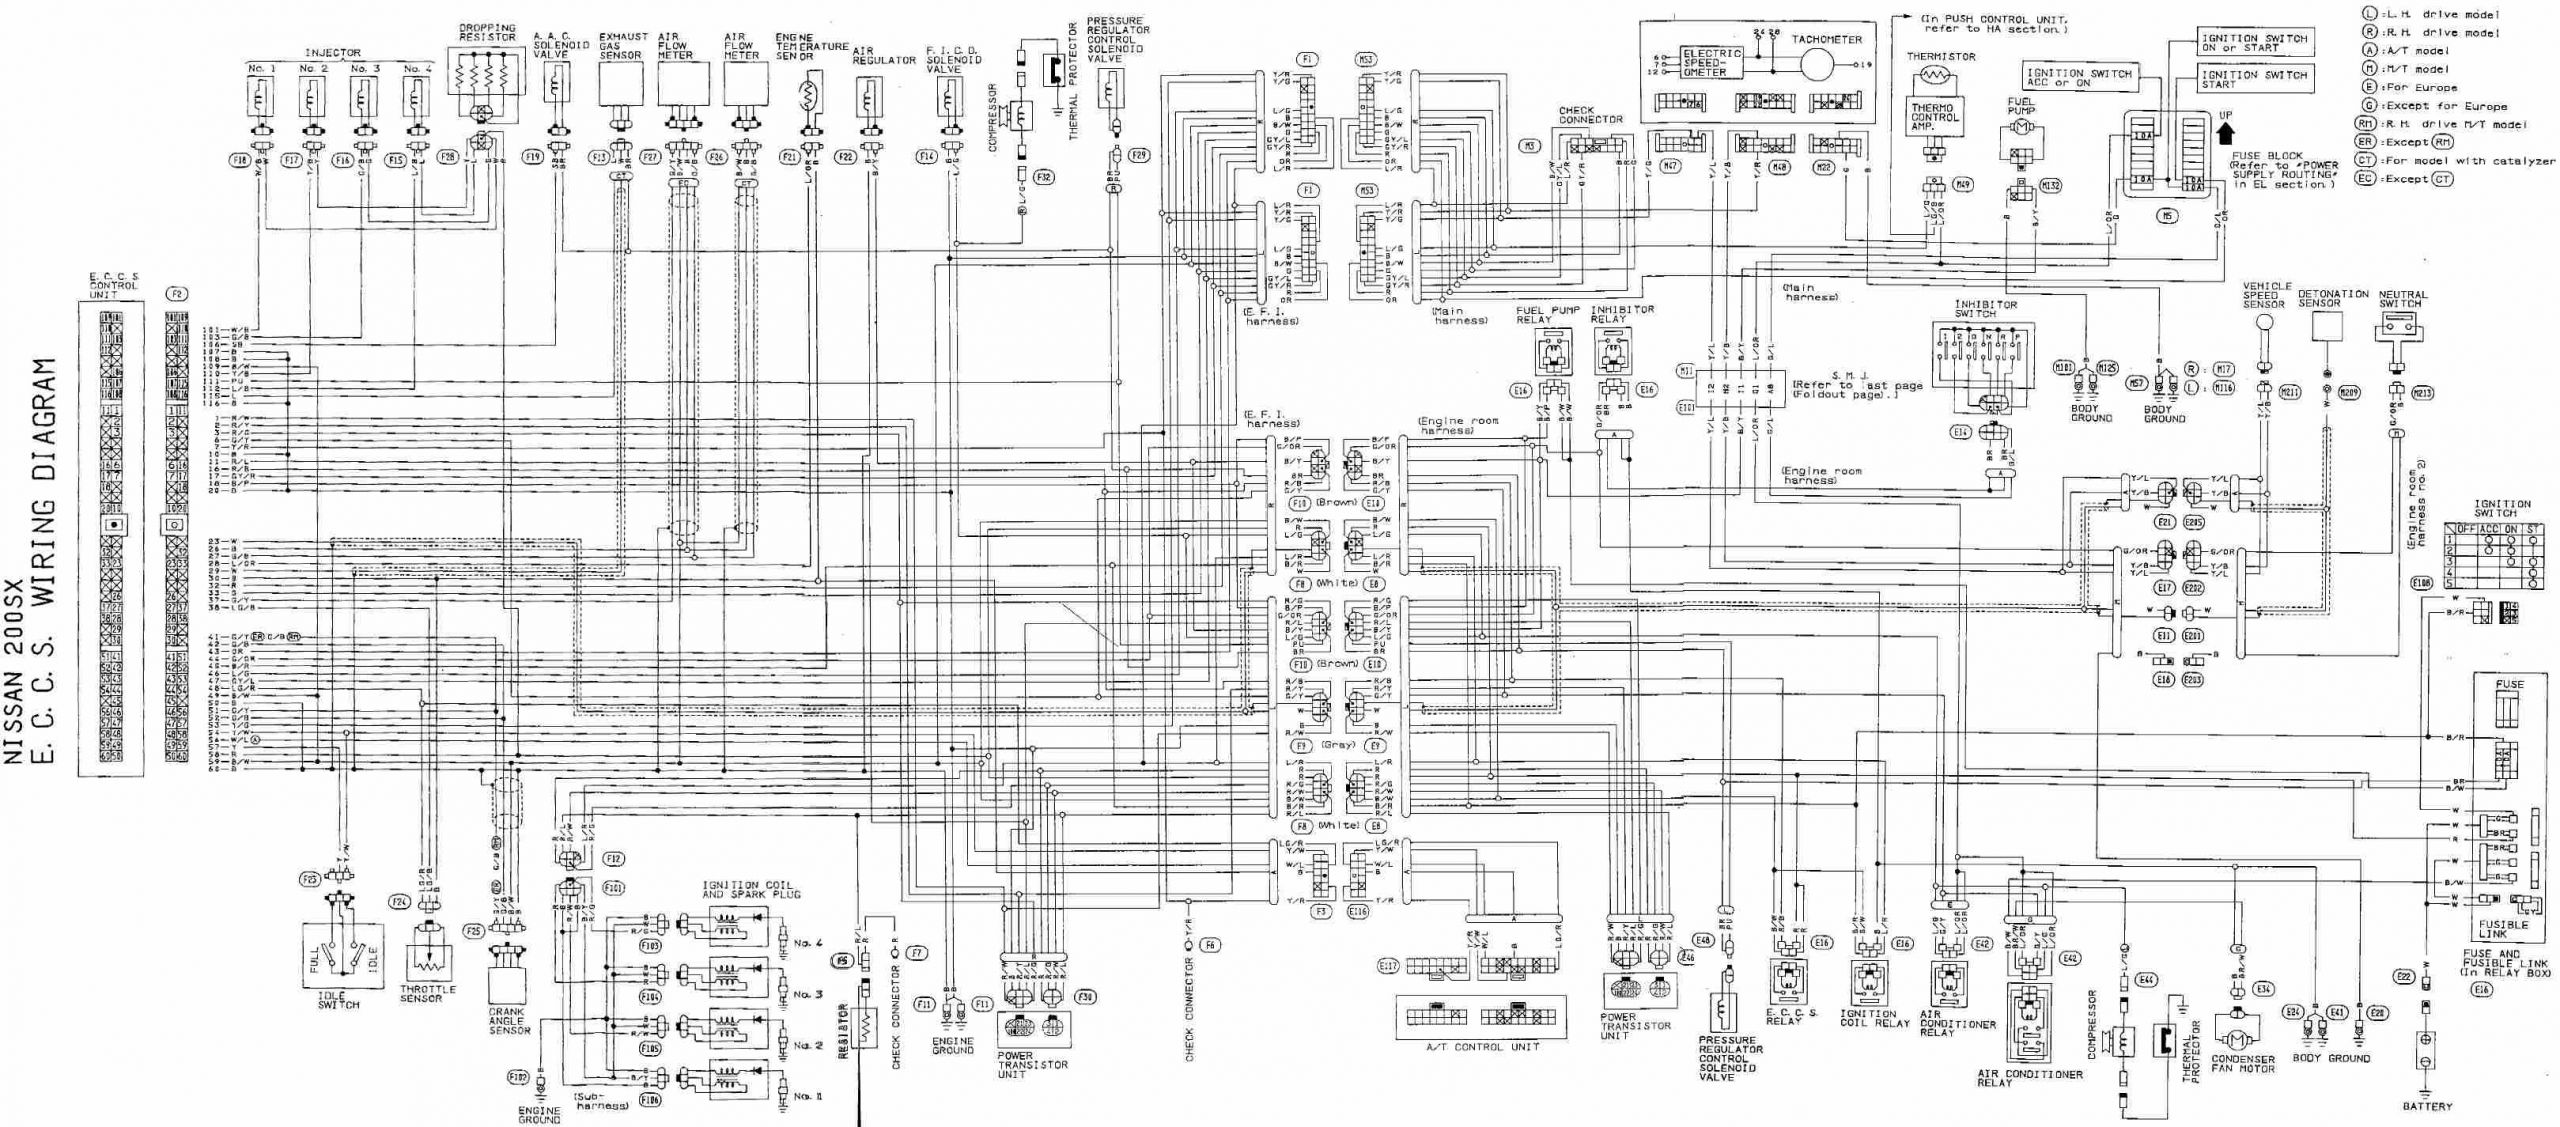 Nissan Micra Engine 2004 Diagram Nissan Micra Wiring Diagram K11 Wiring Diagram Of Nissan Micra Engine 2004 Diagram